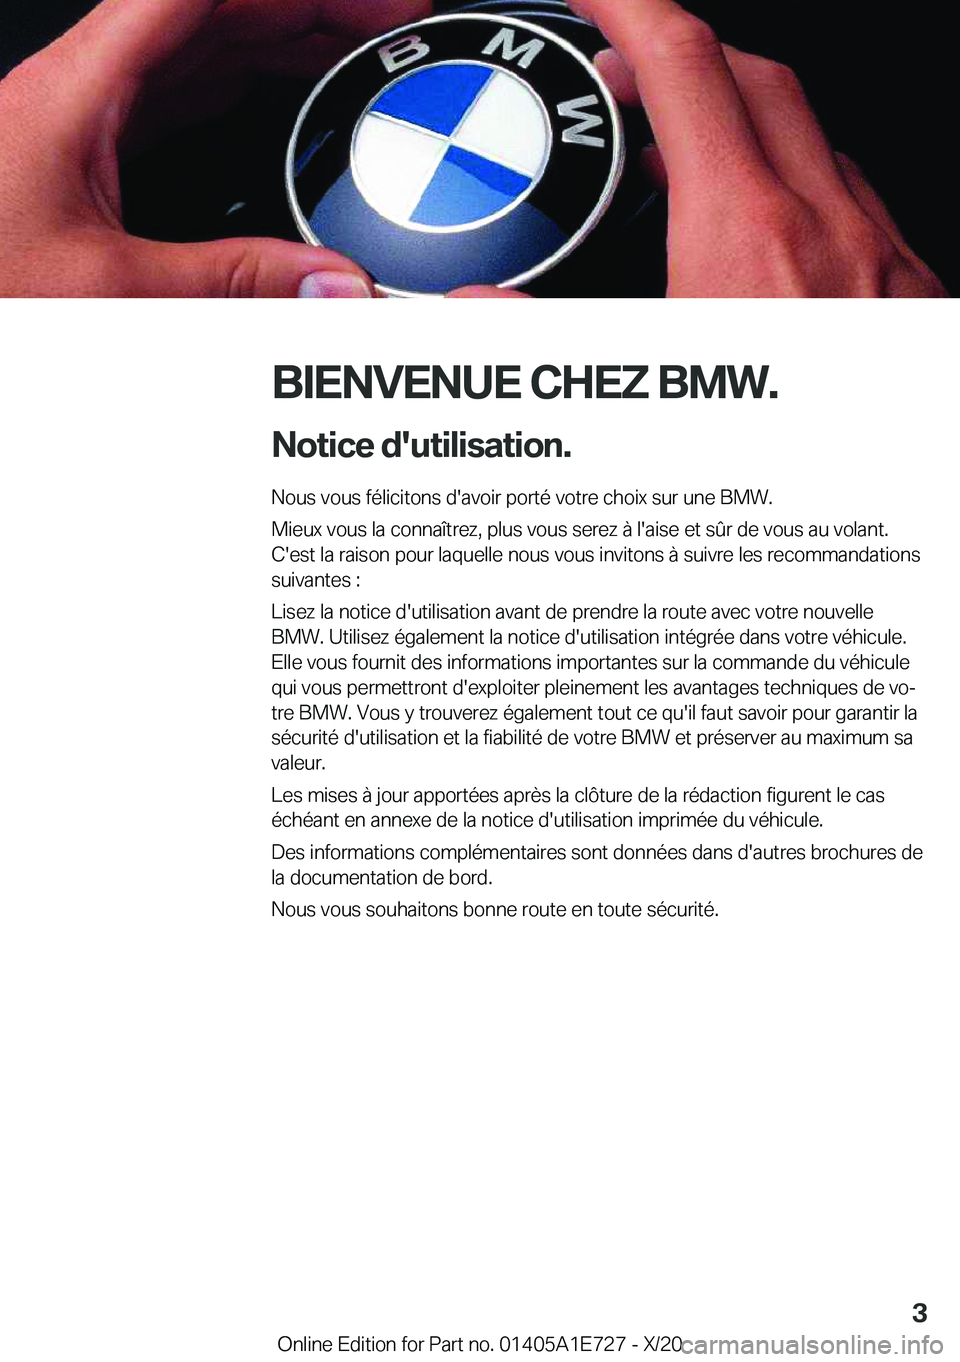 BMW X2 2021  Notices Demploi (in French) �B�I�E�N�V�E�N�U�E��C�H�E�Z��B�M�W�.�N�o�t�i�c�e��d�'�u�t�i�l�i�s�a�t�i�o�n�.
�N�o�u�s��v�o�u�s��f�é�l�i�c�i�t�o�n�s��d�'�a�v�o�i�r��p�o�r�t�é��v�o�t�r�e��c�h�o�i�x��s�u�r��u�n�e�